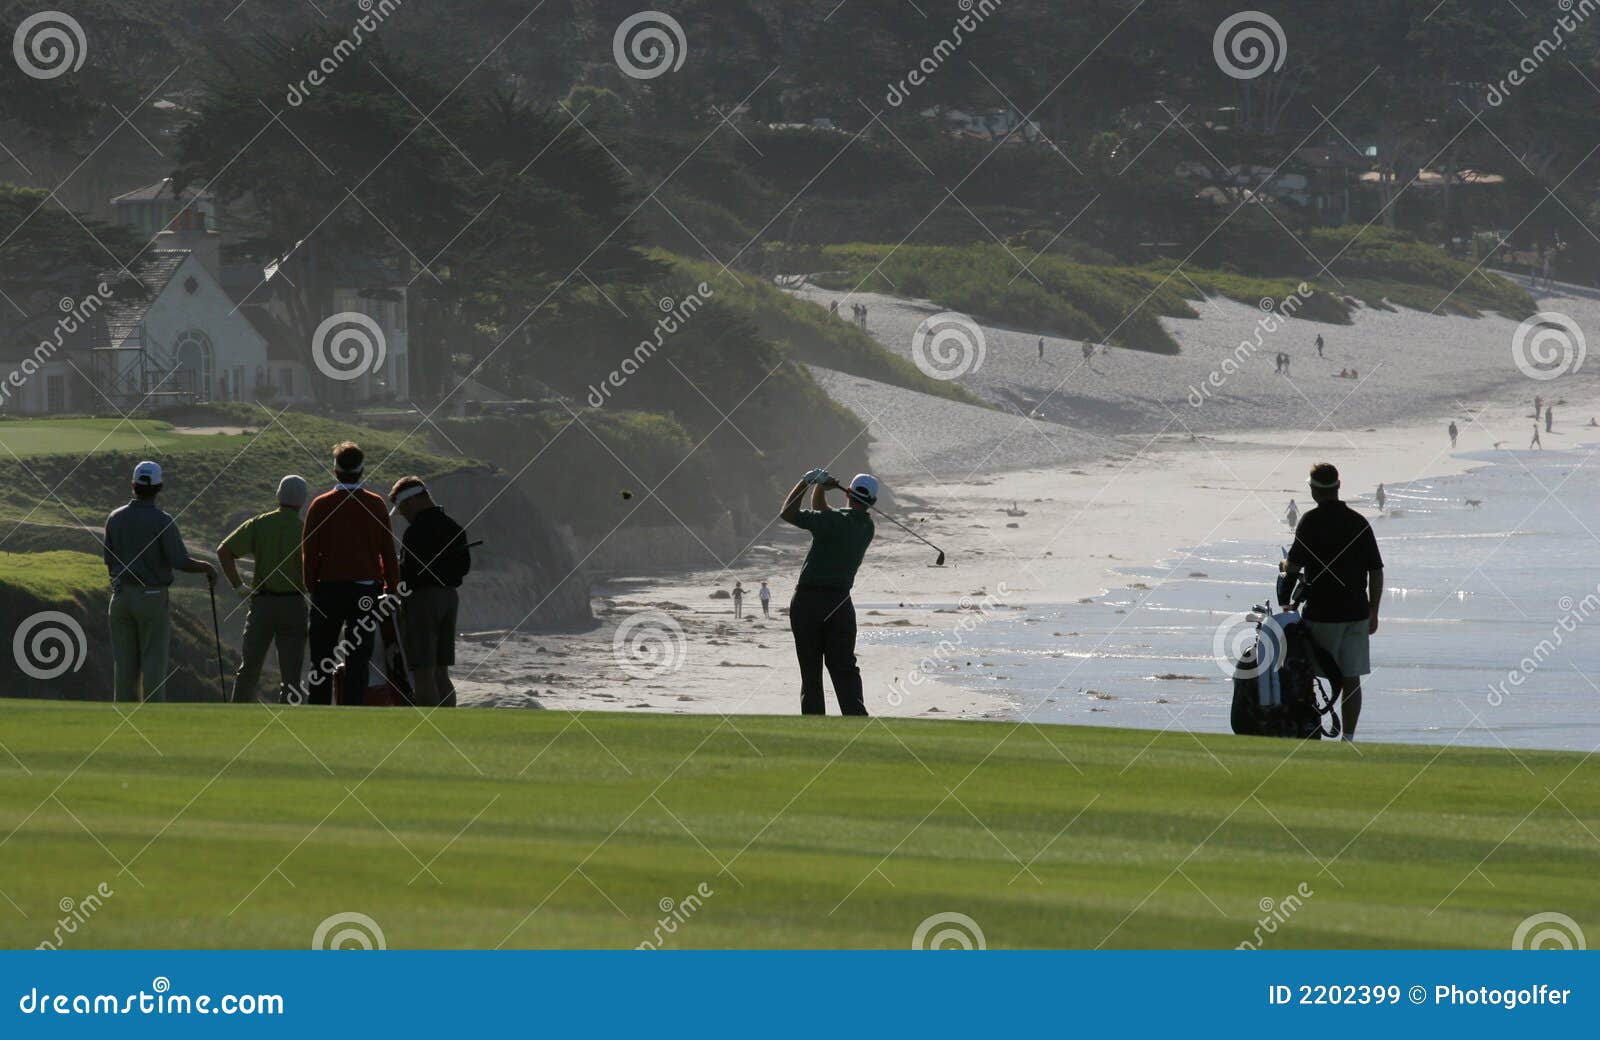 pebble beach golf links, calif